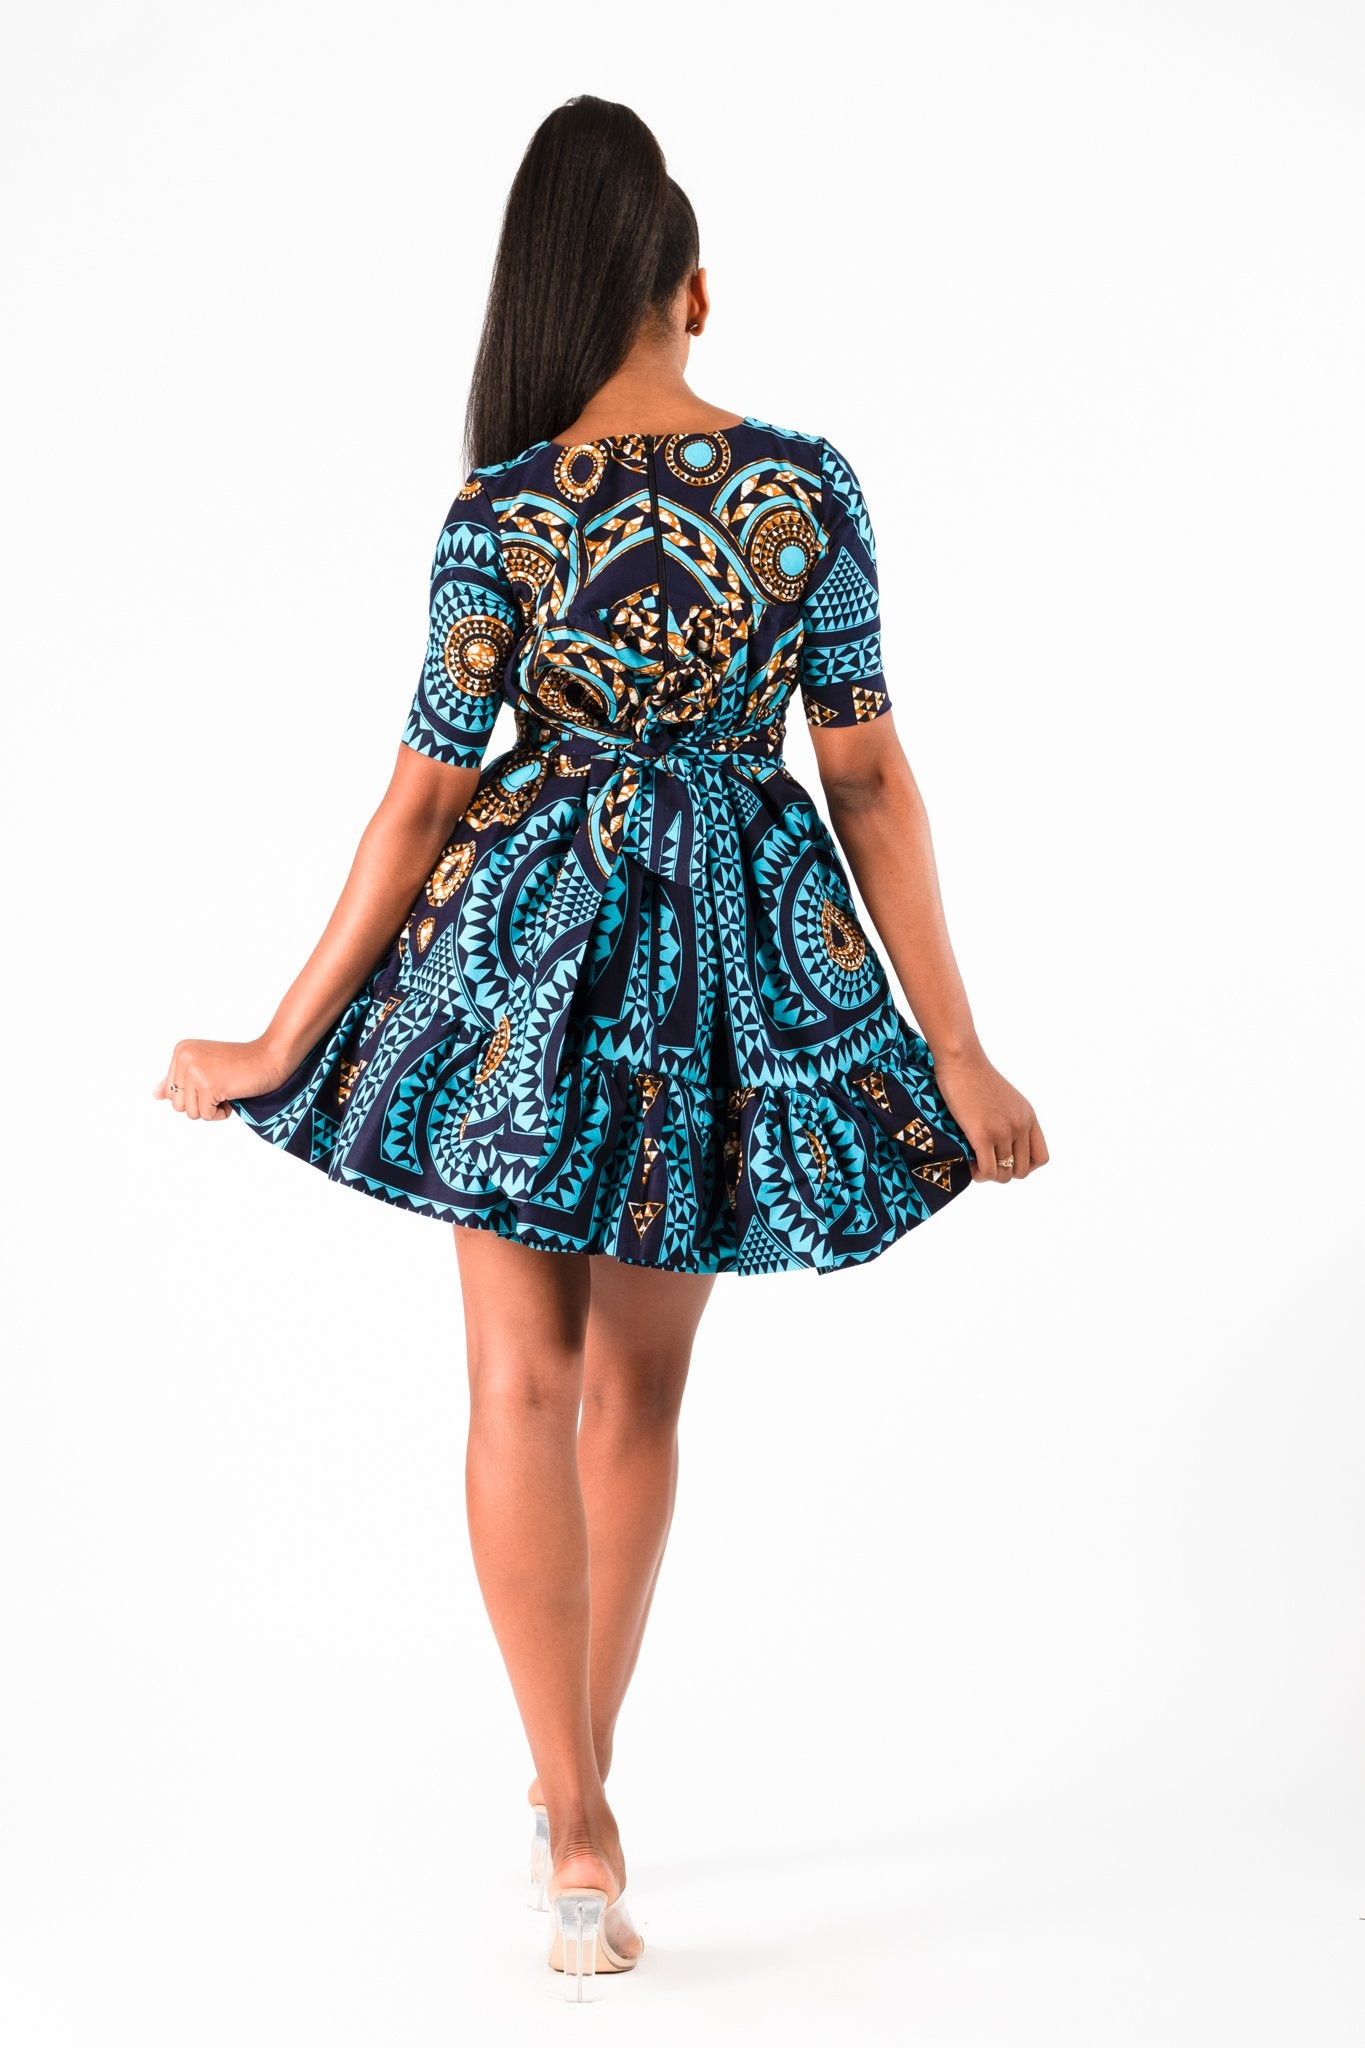 TAMI AFRICAN PRINT ANKARA UMBRELLA (2-IN-1) DRESS